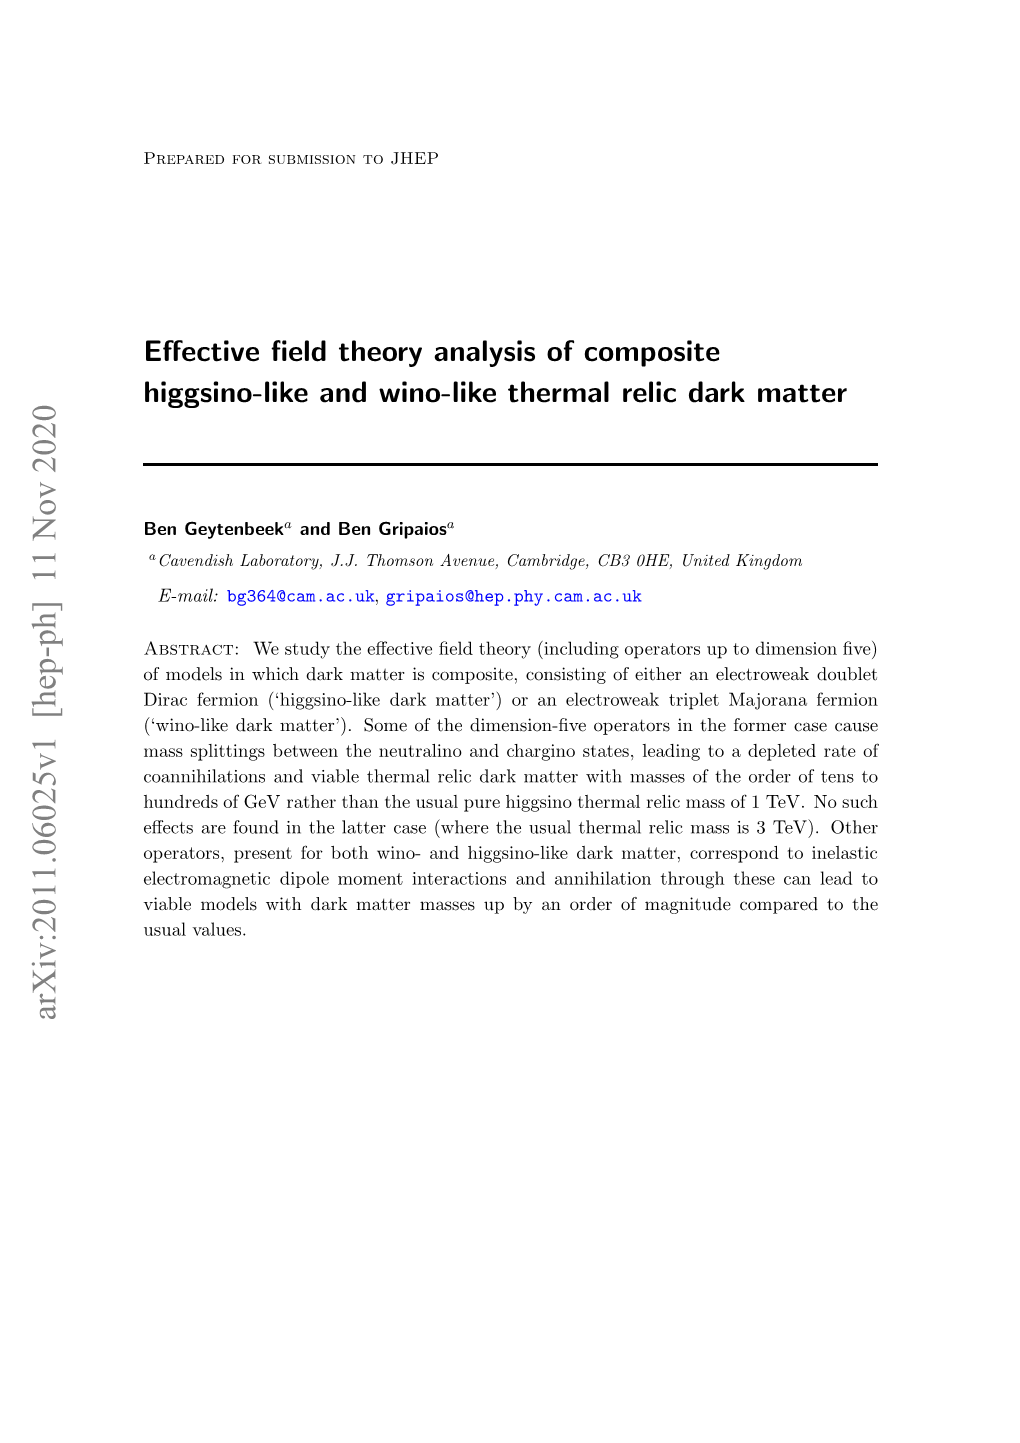 Effective Field Theory Analysis of Composite Higgsino-Like and Wino